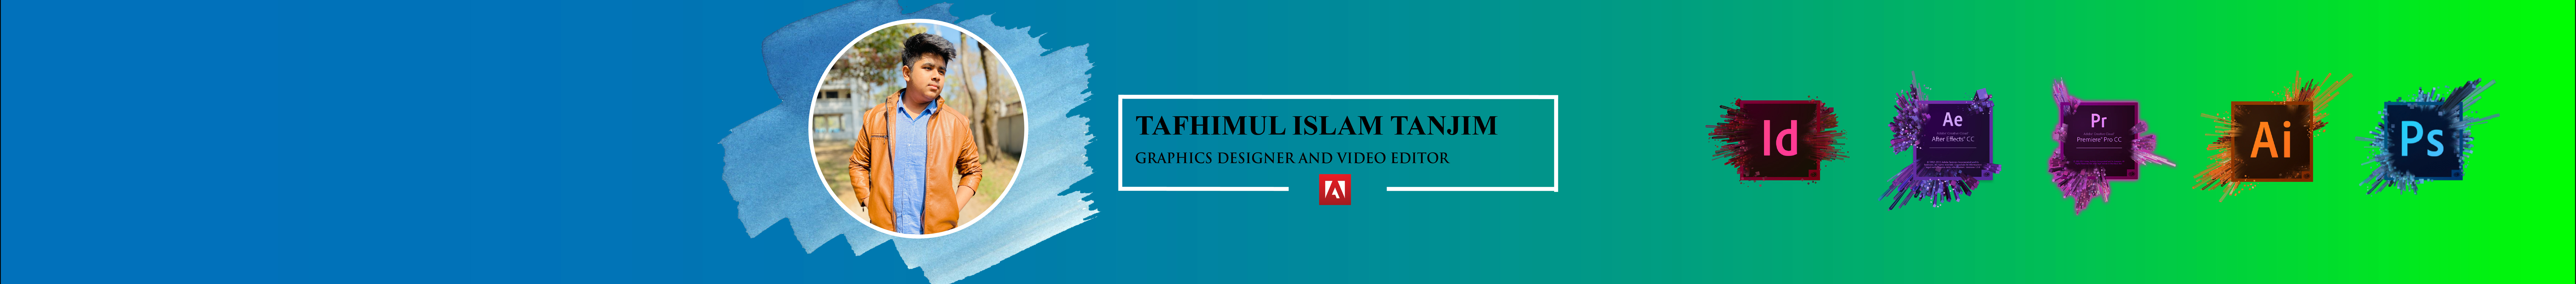 Banner de perfil de Tafhimul Tanjim